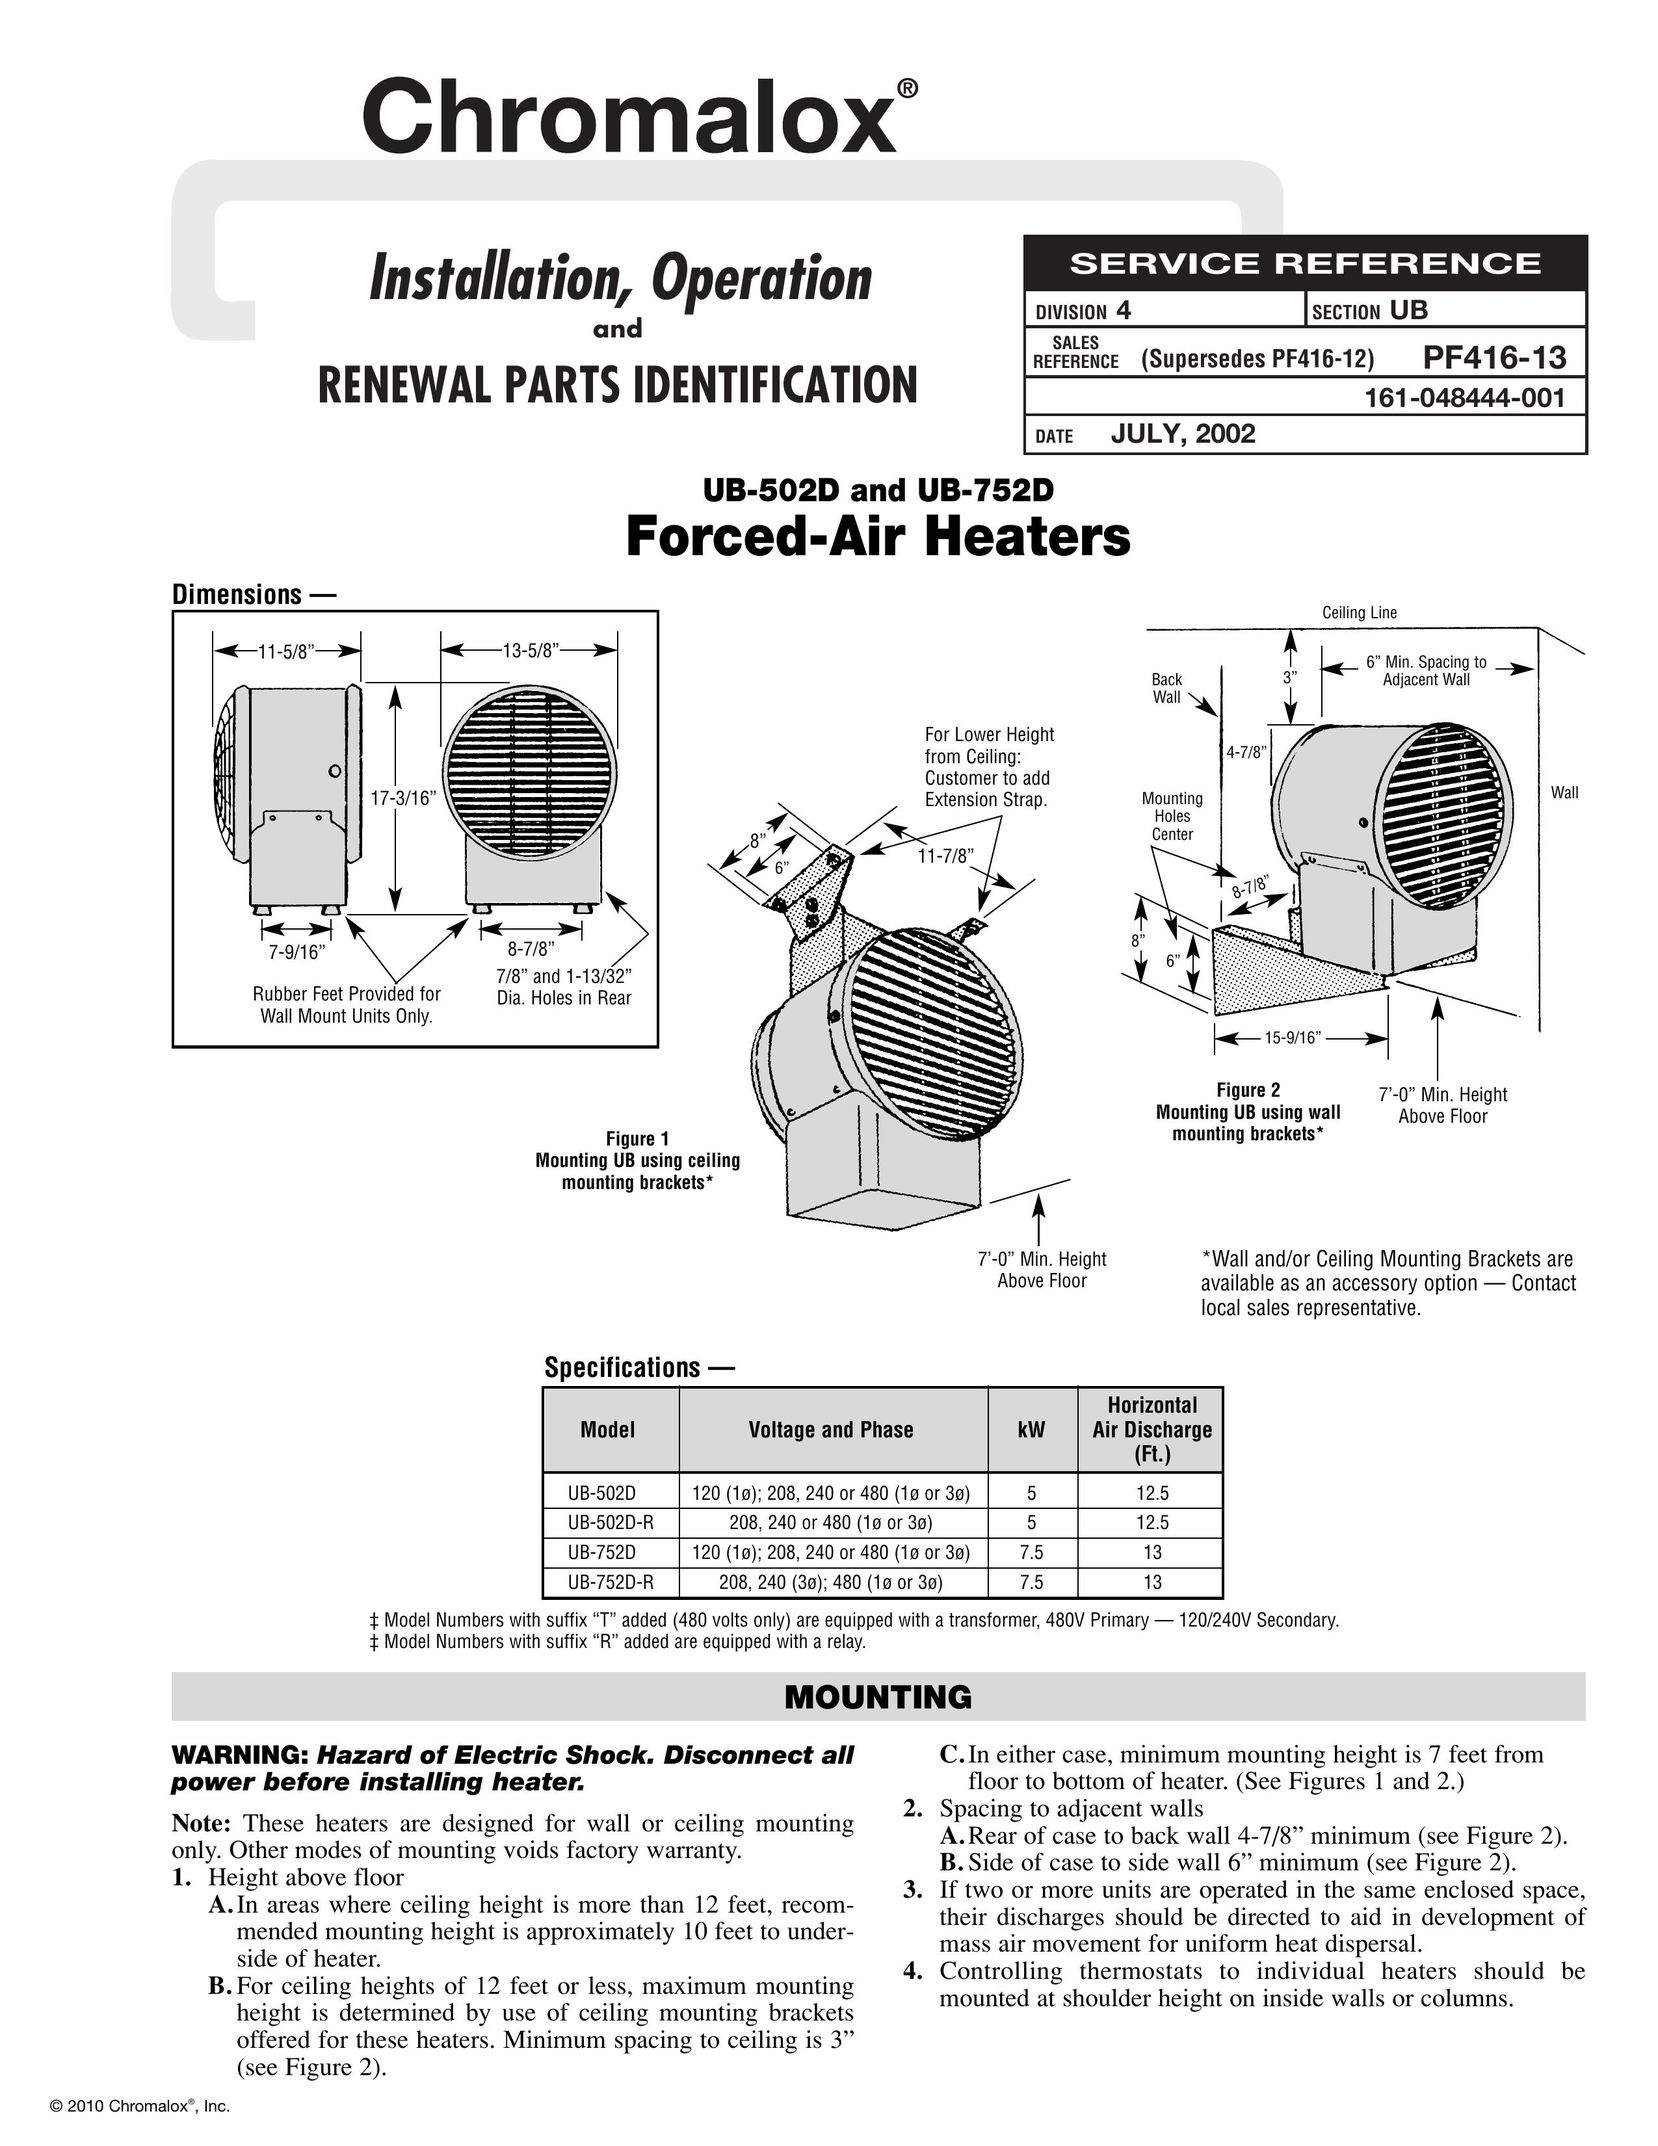 Chromalox UB-752D Air Conditioner User Manual